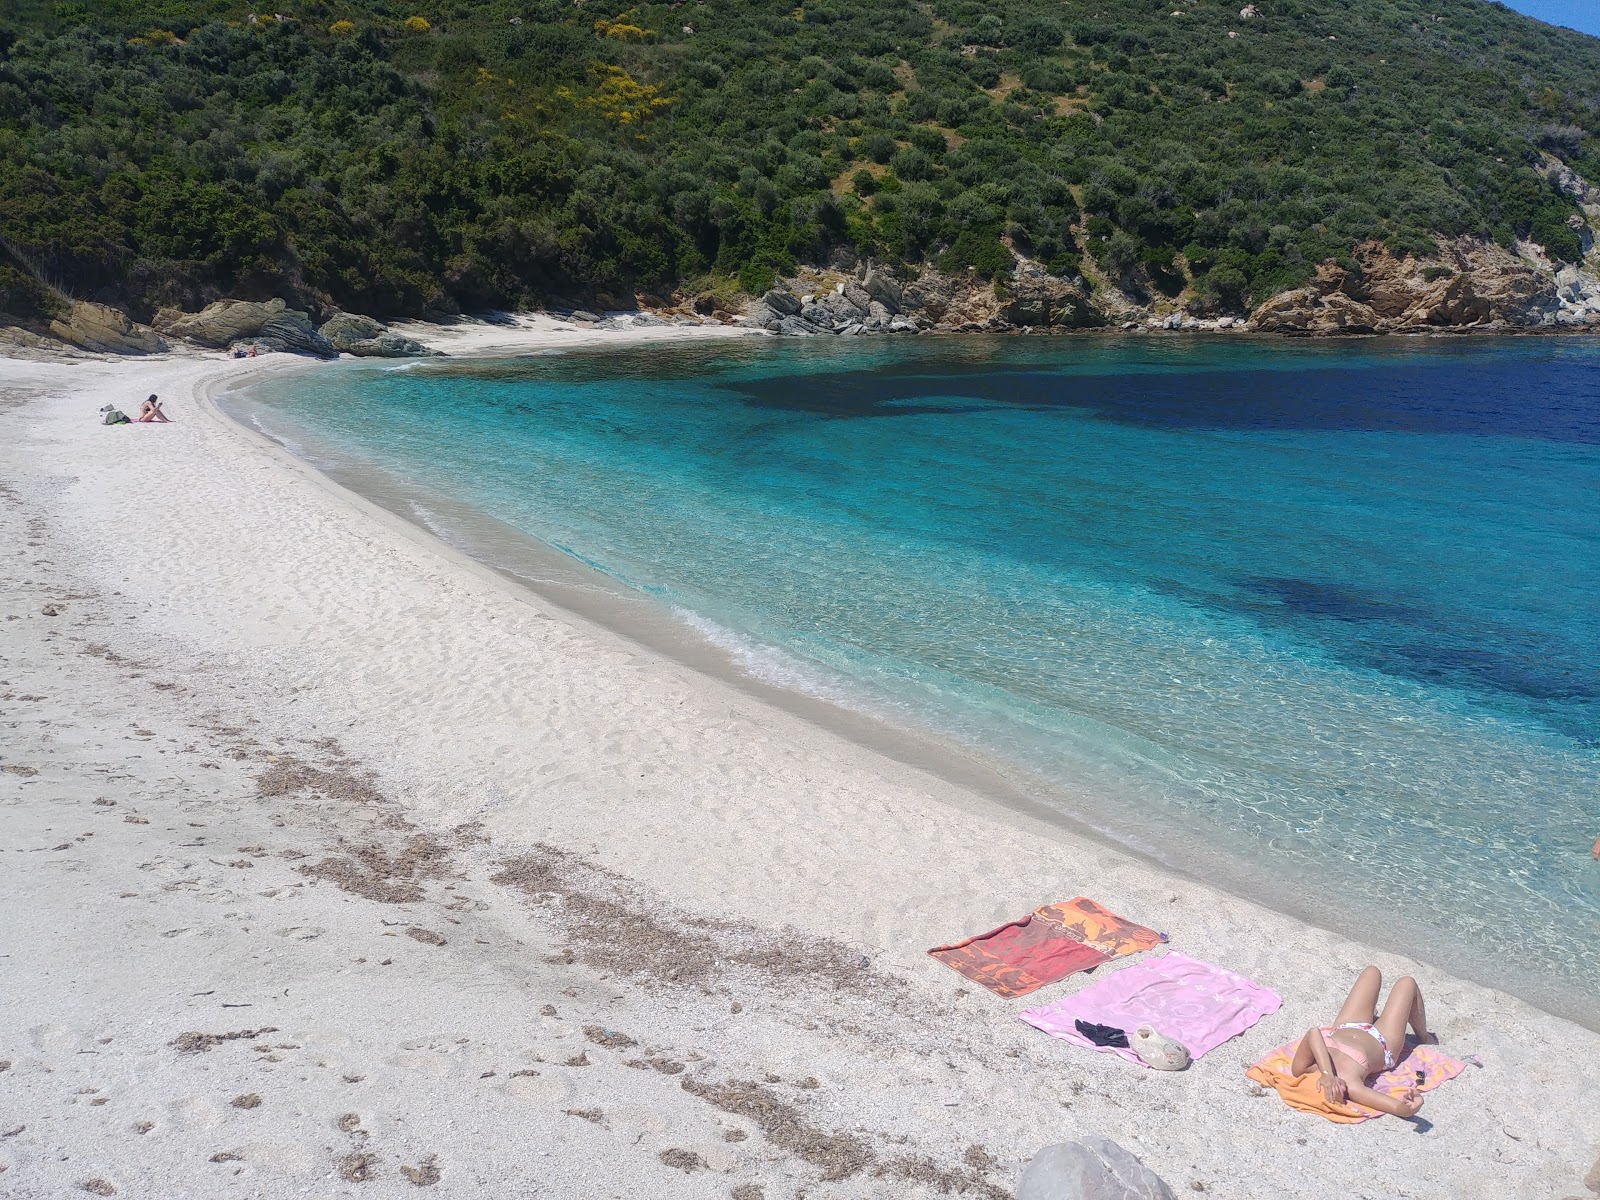 Fotografie cu Mageiras beach cu o suprafață de nisip alb